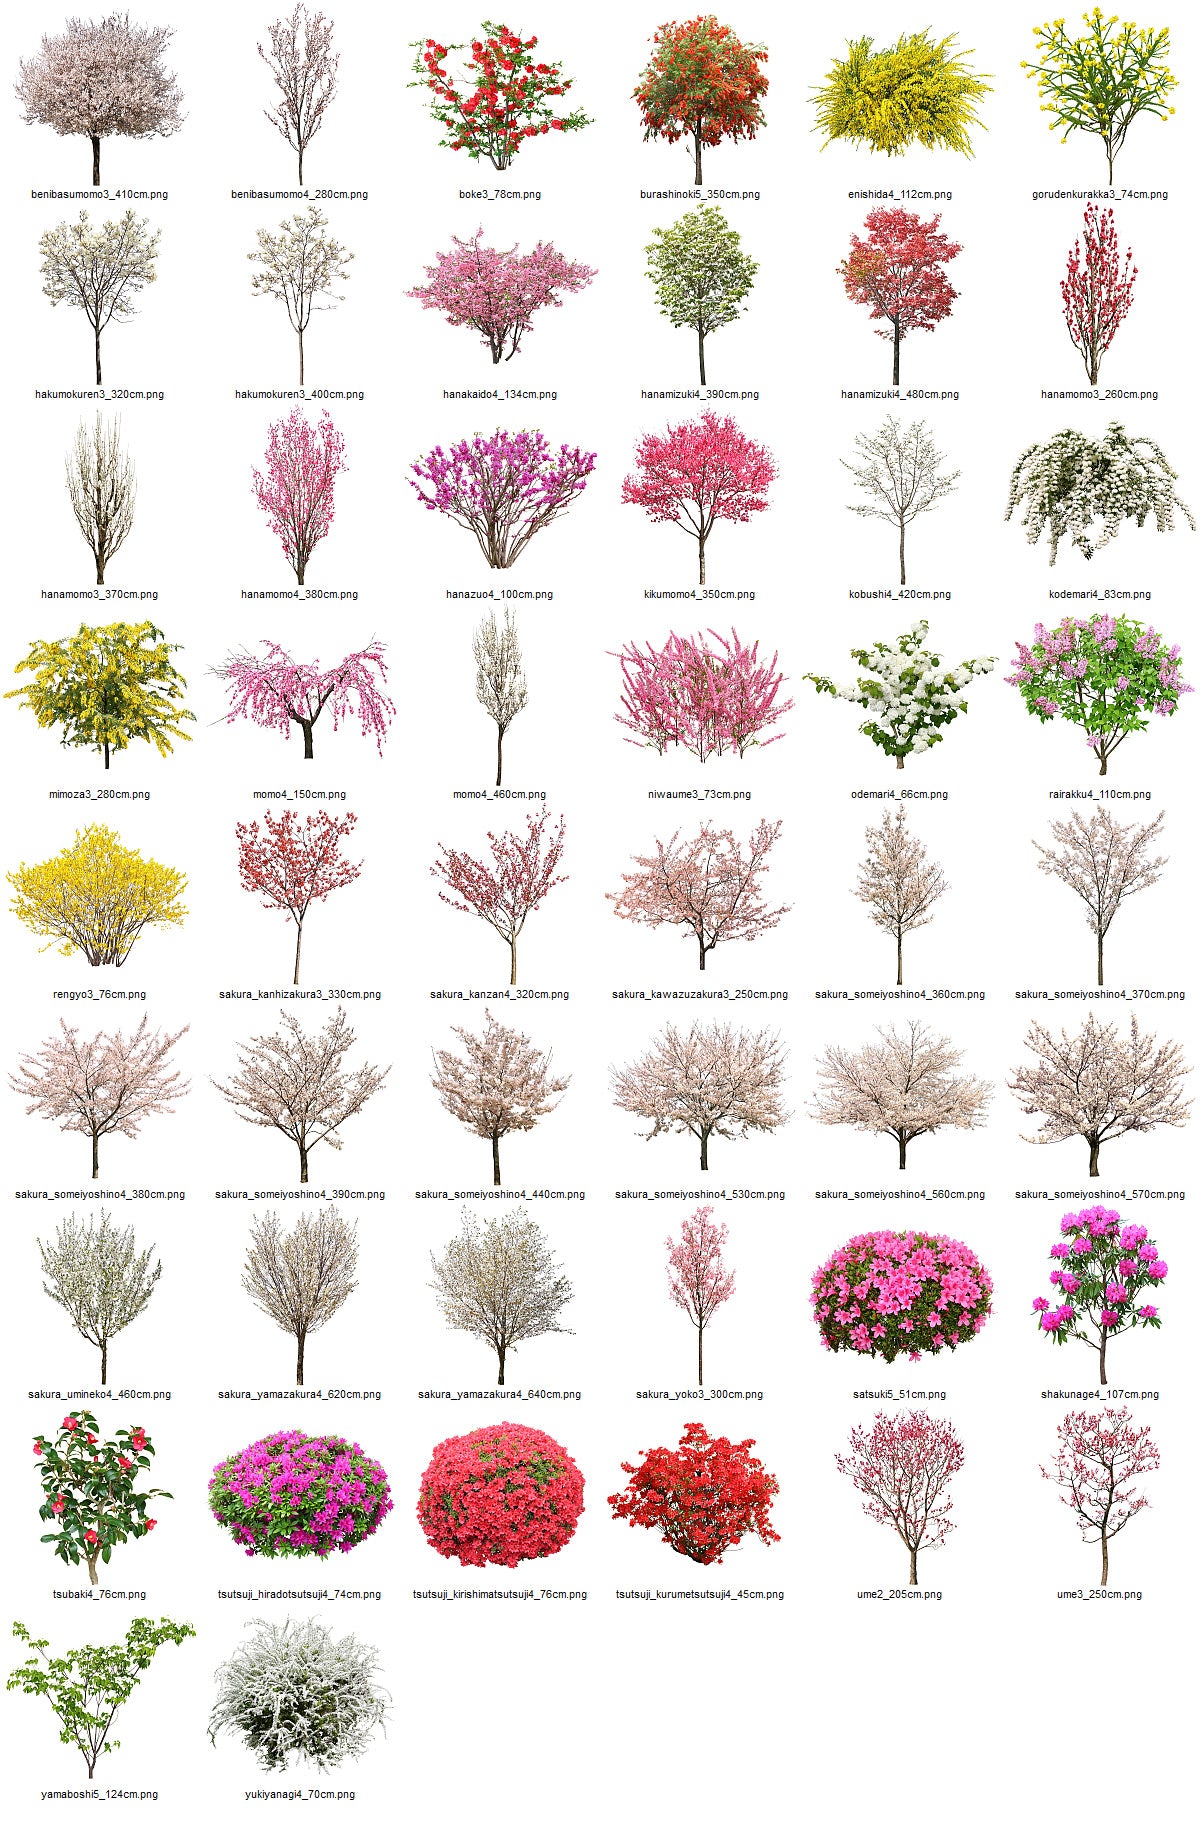 【BEST素材】街を彩る春の花樹